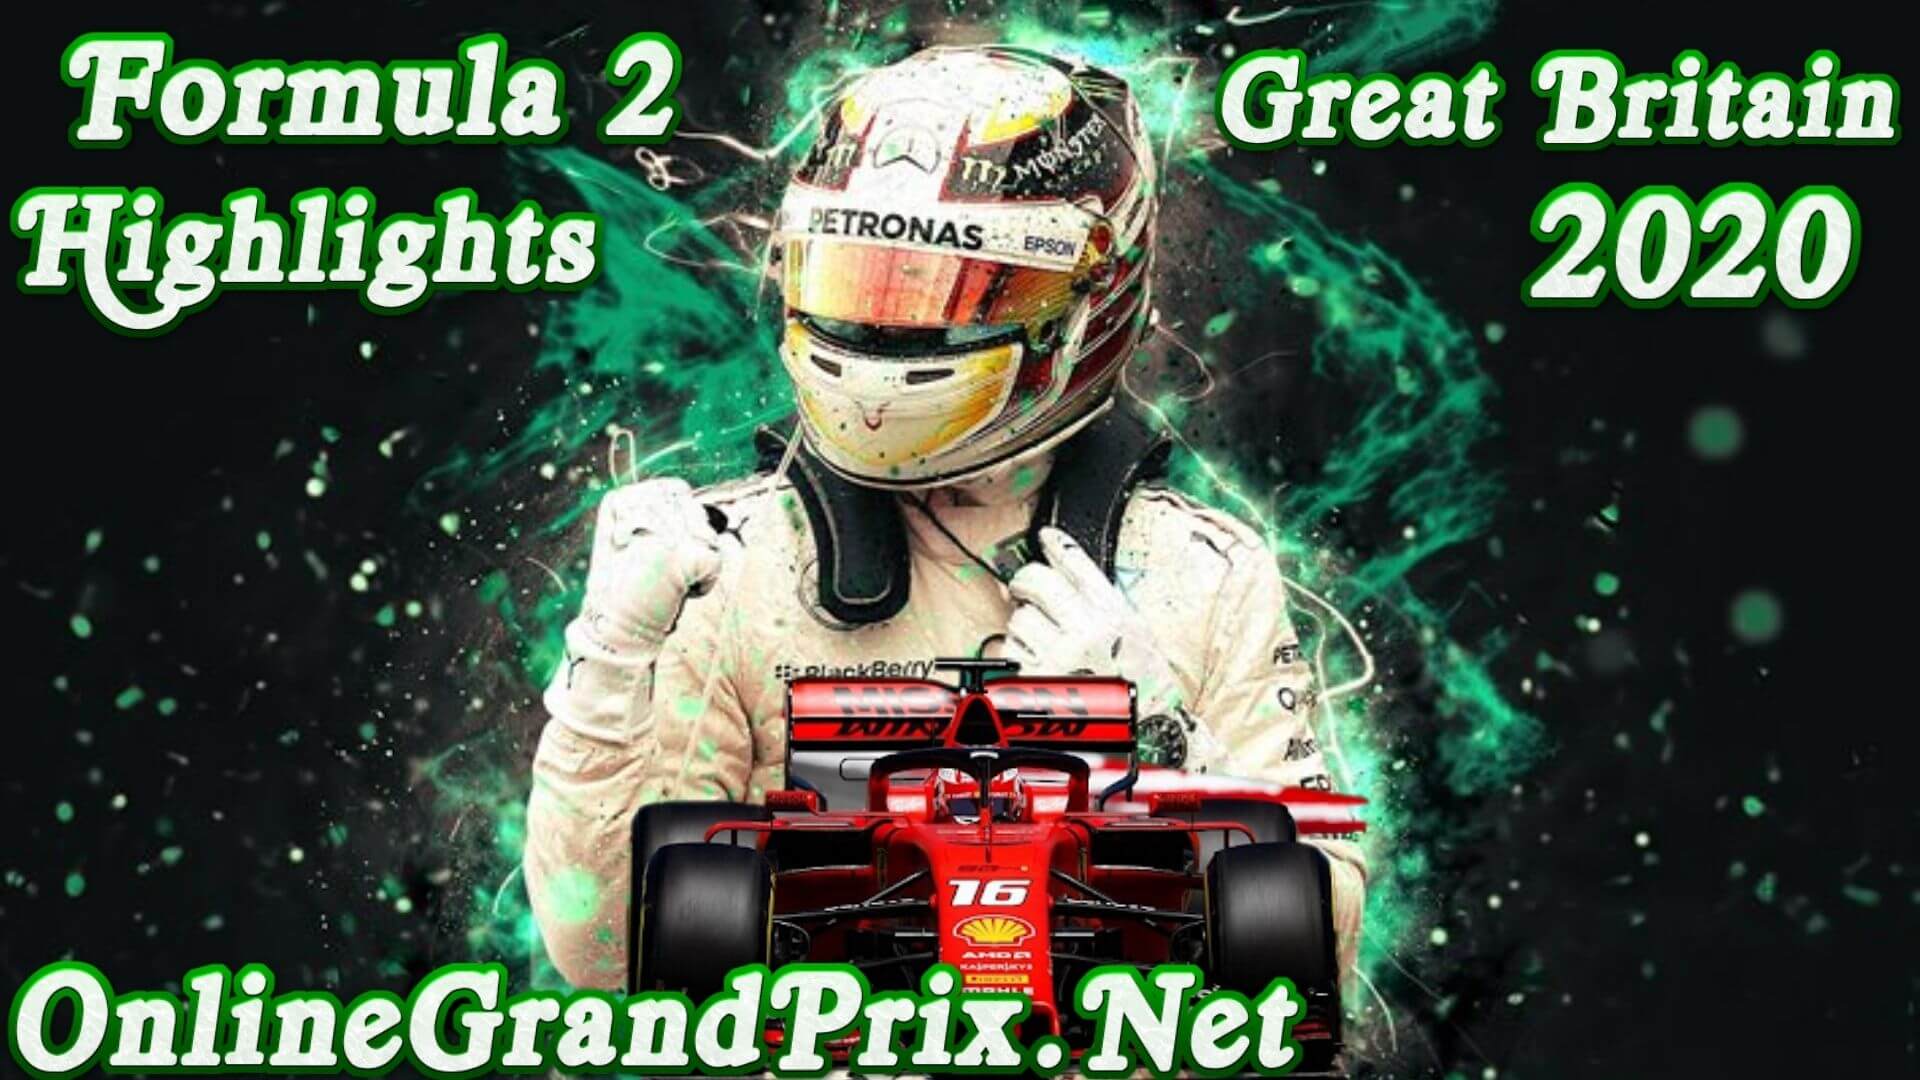 Great Britain GP F2 Highlights 2020